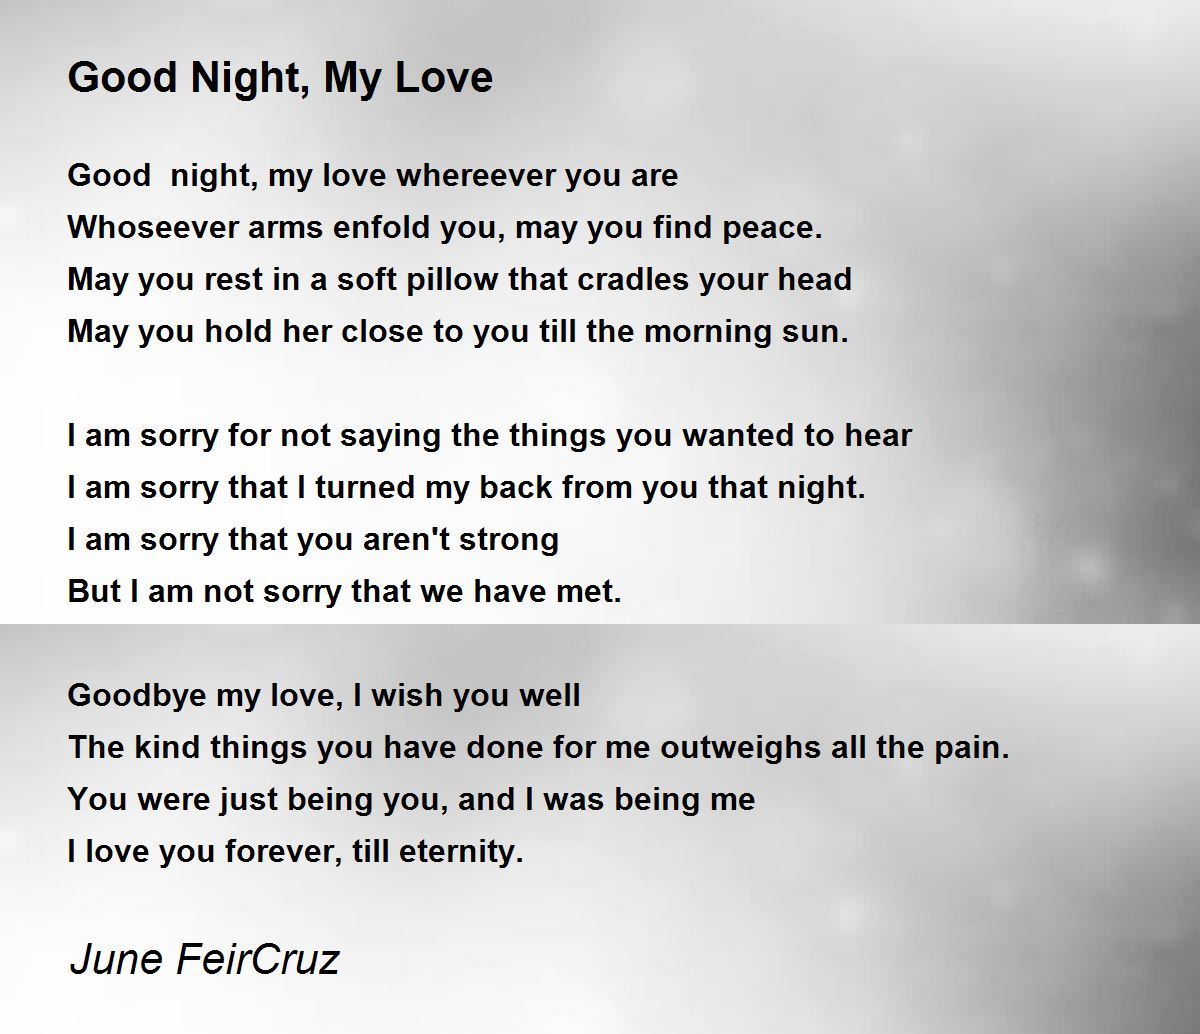 Good Night, My Love - Good Night, My Love Poem by June FeirCruz